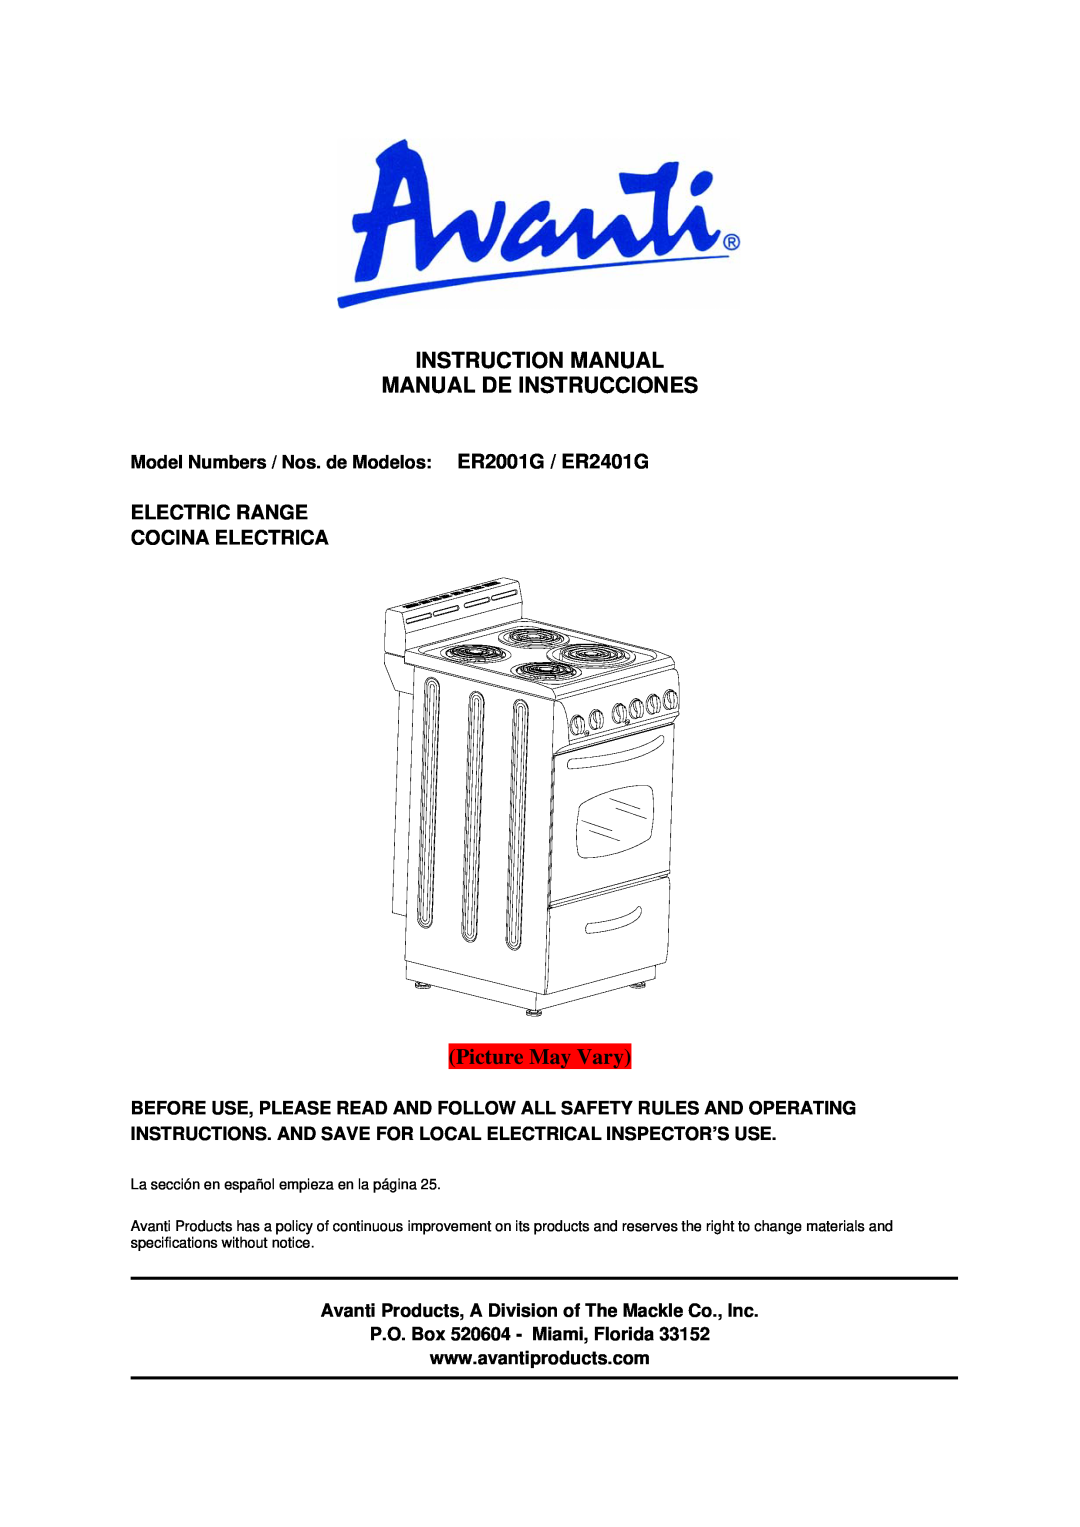 Avanti ER2401G instruction manual Picture May Vary, Electric Range Cocina Electrica, P.O. Box 520604 - Miami, Florida 